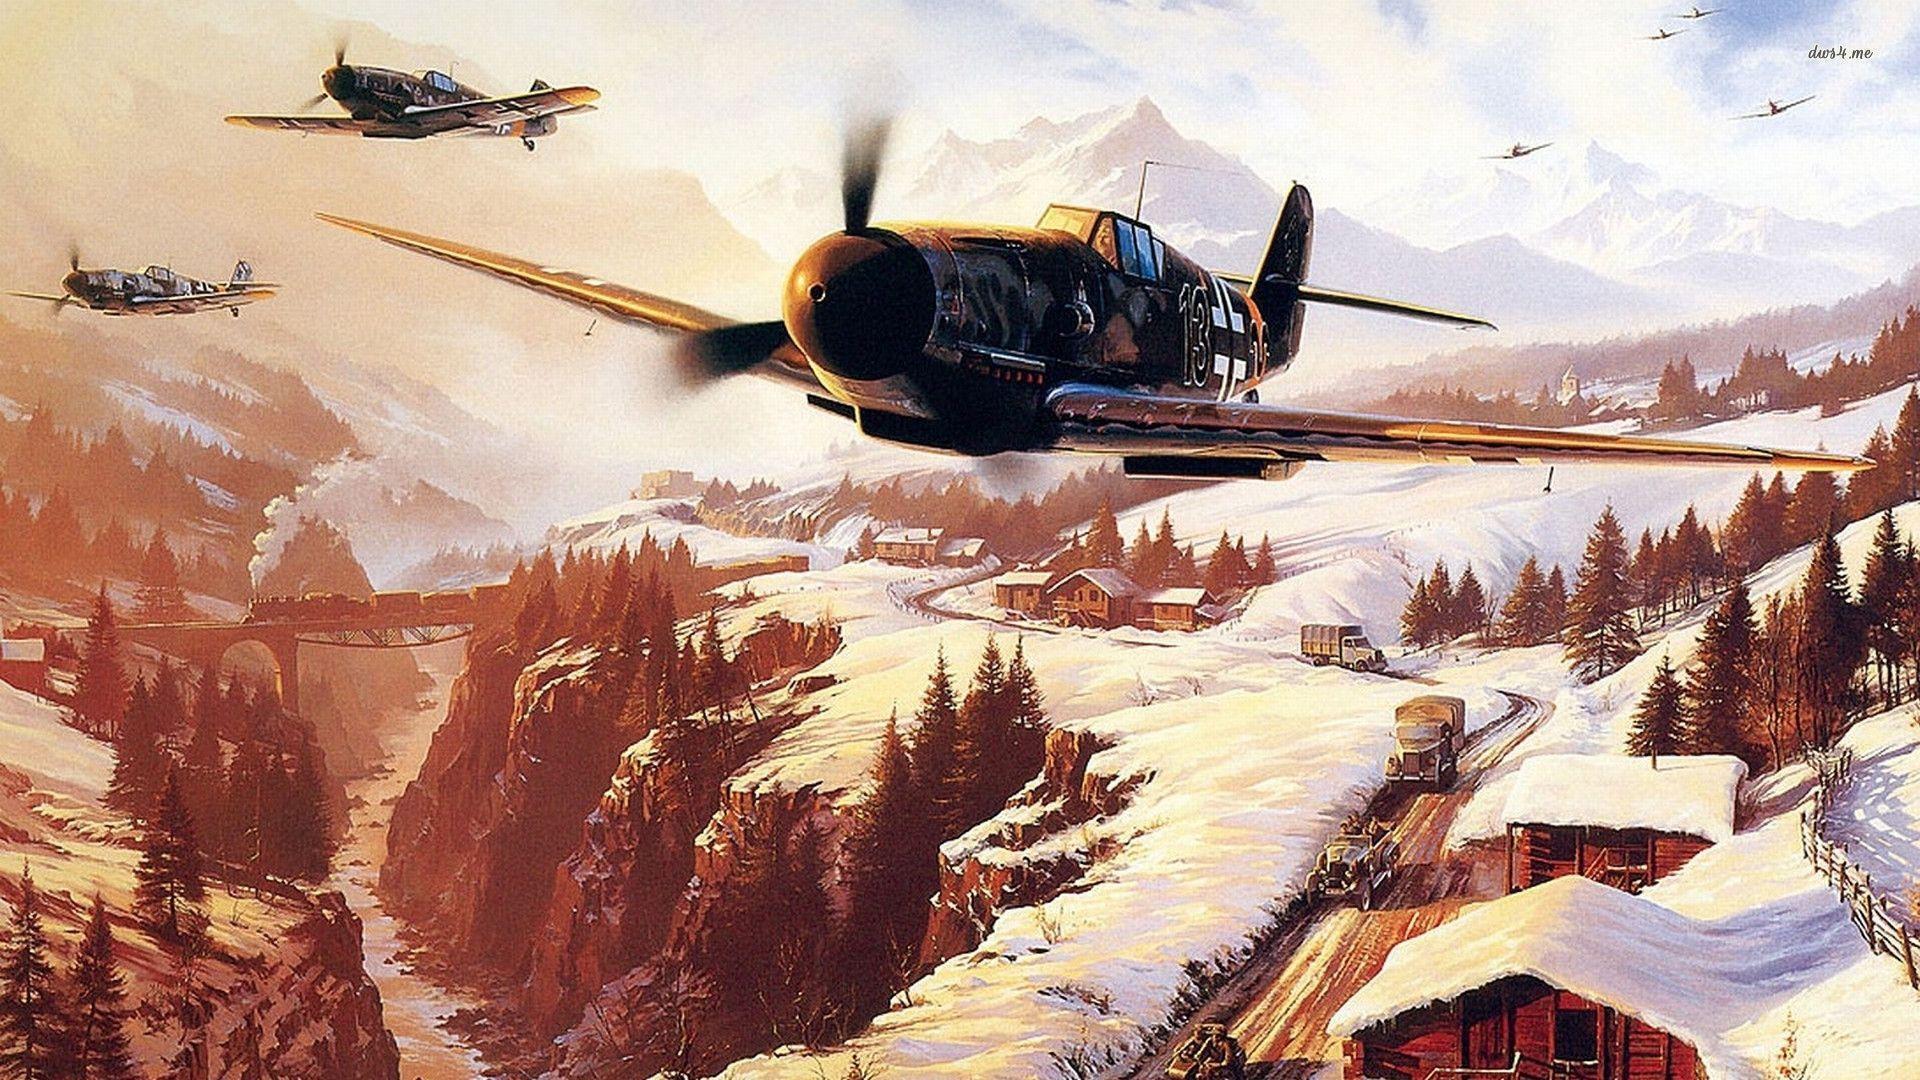 Wwii Military Planes Wallpaper Digital Art Wallpaper 1920x1080PX